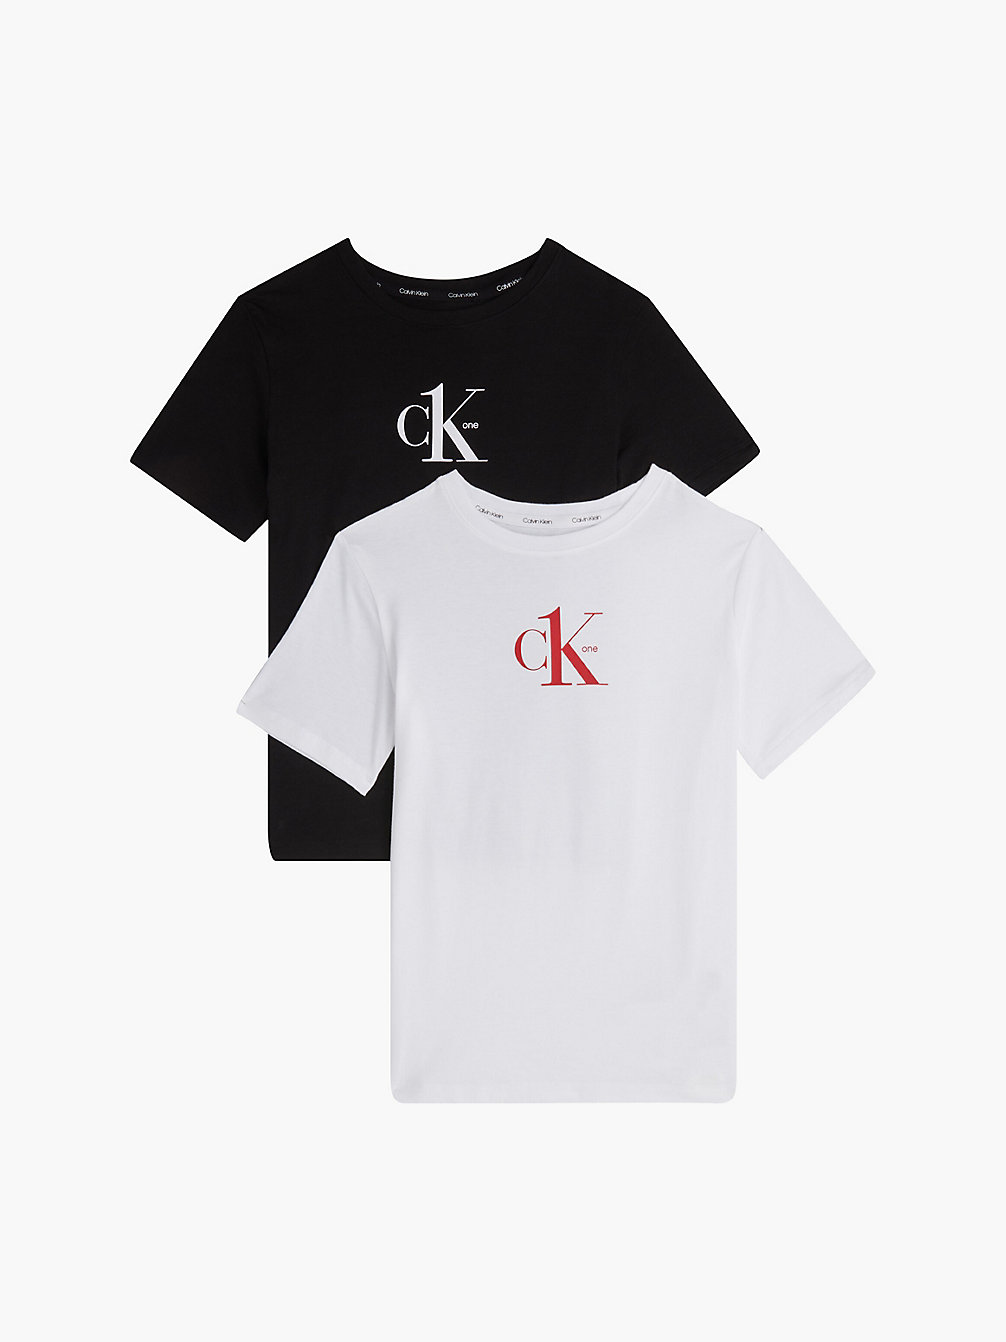 Pack De 2 Camisetas Unisex - CK One > PVHBLACK/PVHWHITE > undefined kids unisex > Calvin Klein